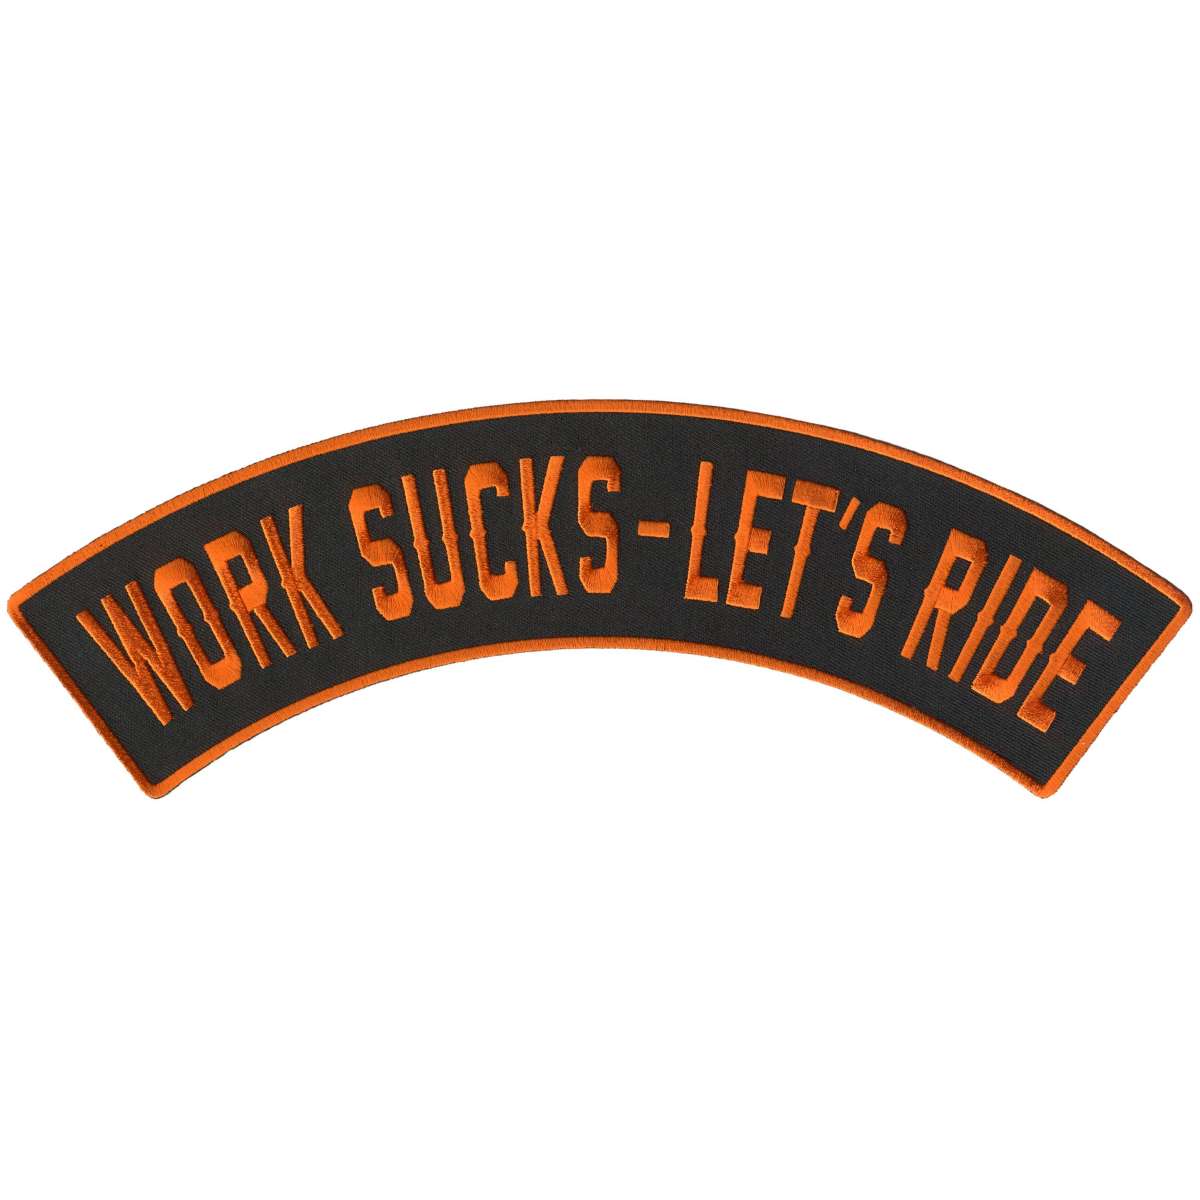 Hot Leathers Work Sucks - Let's Ride 12" X 3" Top Rocker Patch PPM4213